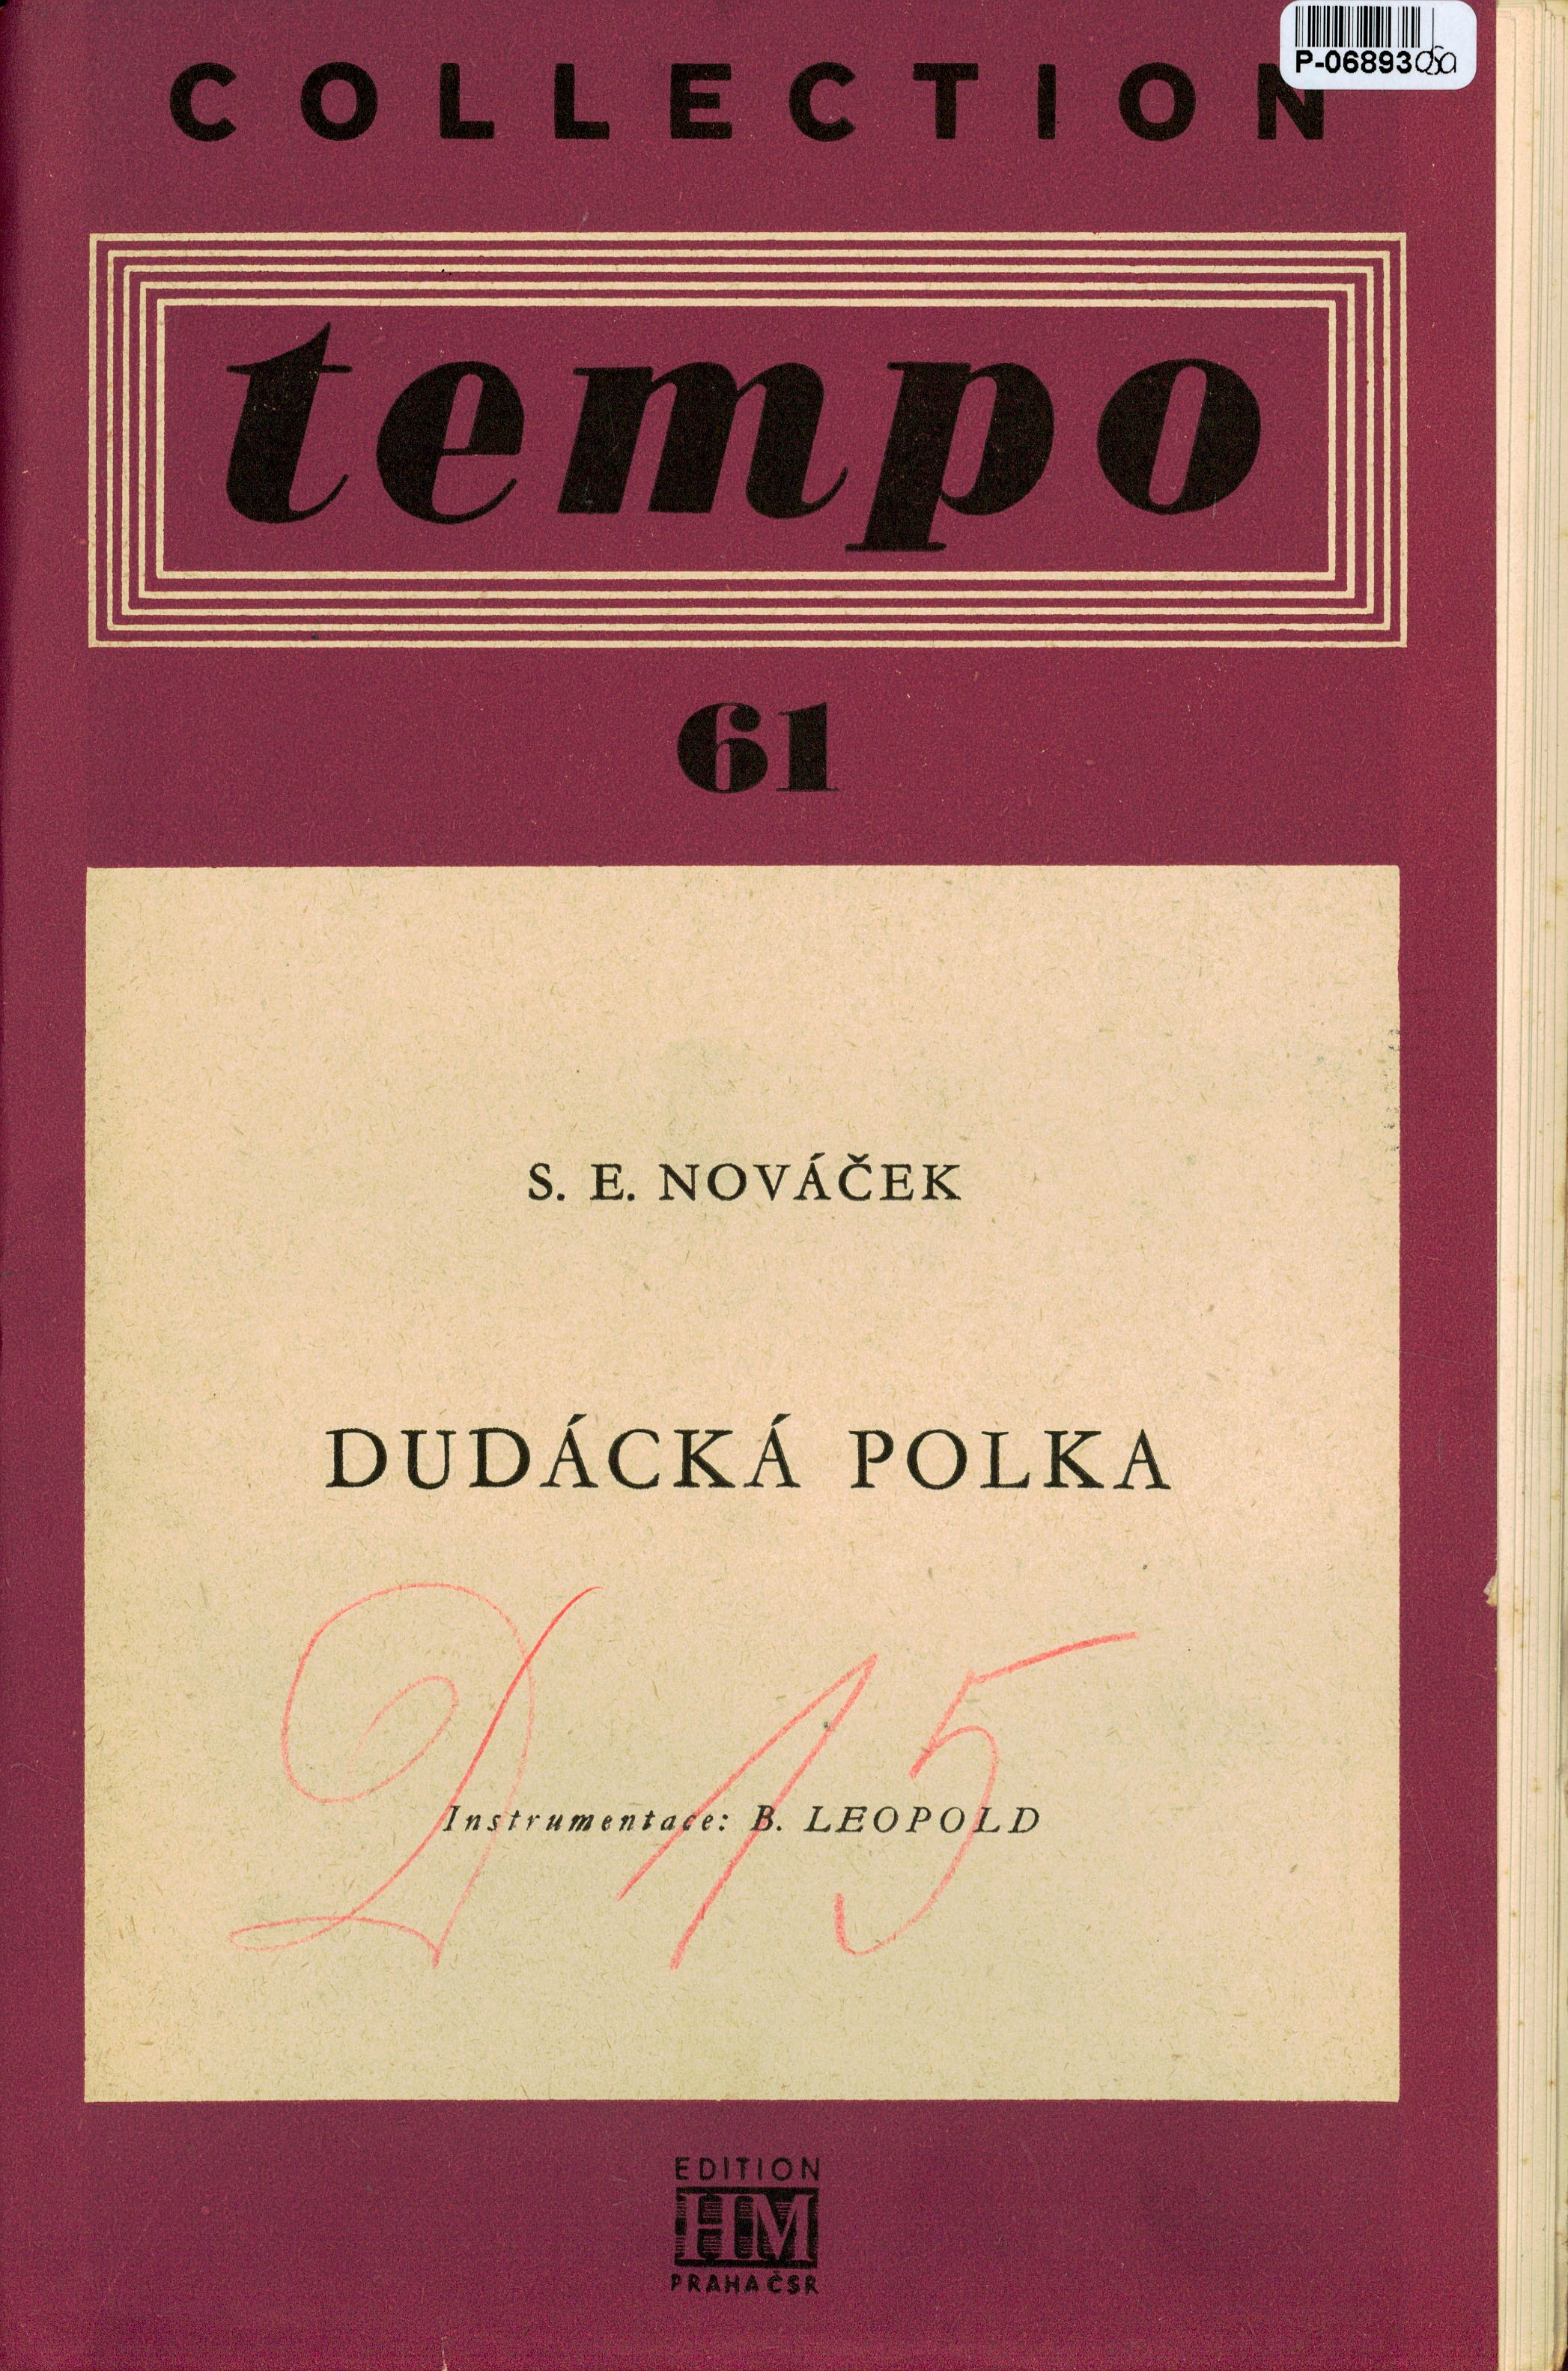 Collection tempo 61 - Dudácká polka